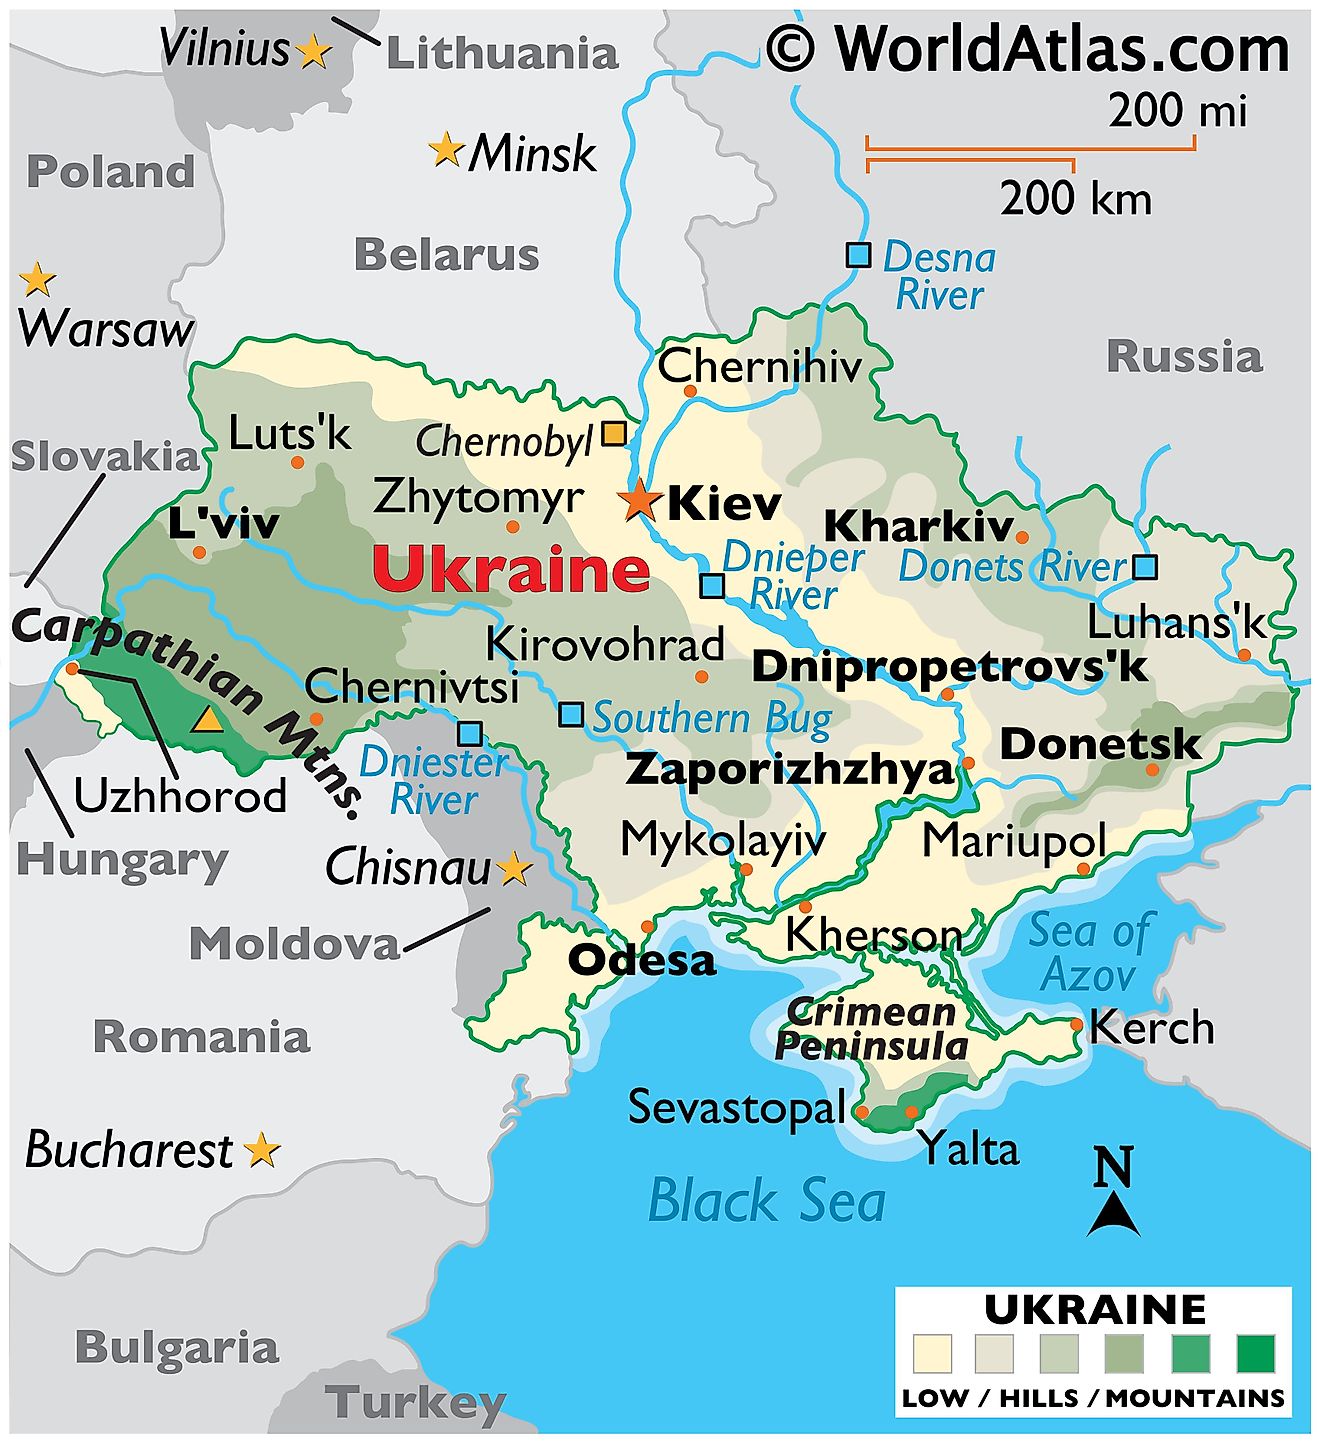 poland to ukraine travel